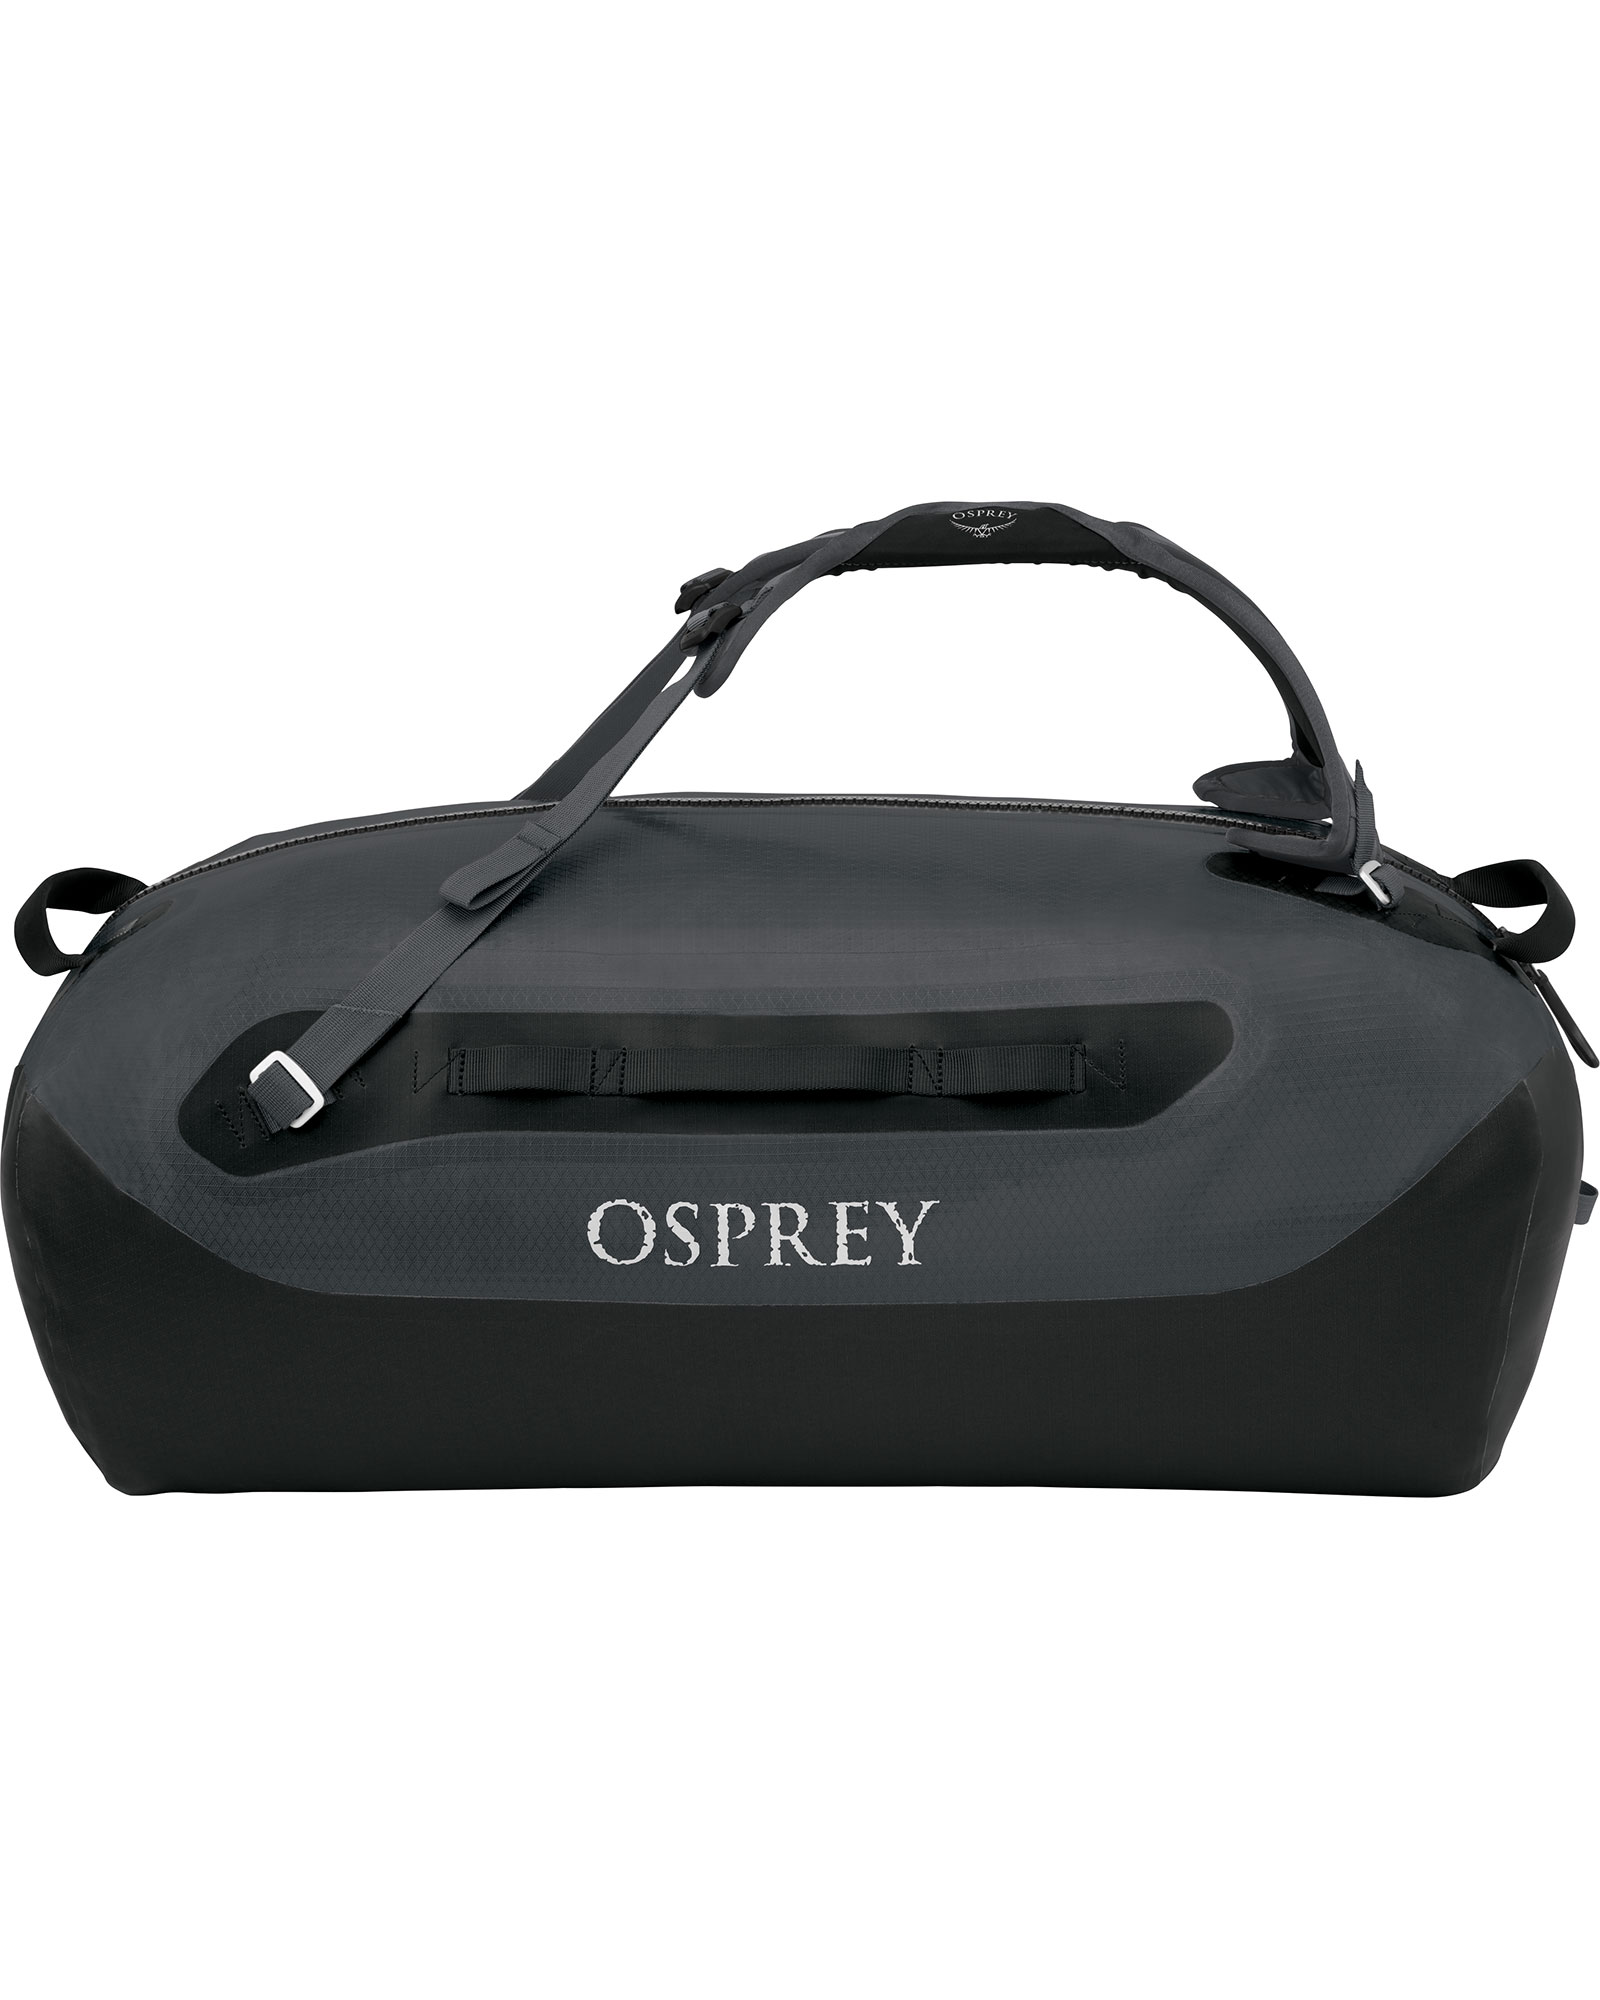 Osprey Transporter 70 Waterproof Duffel - Tunnel Vision Grey